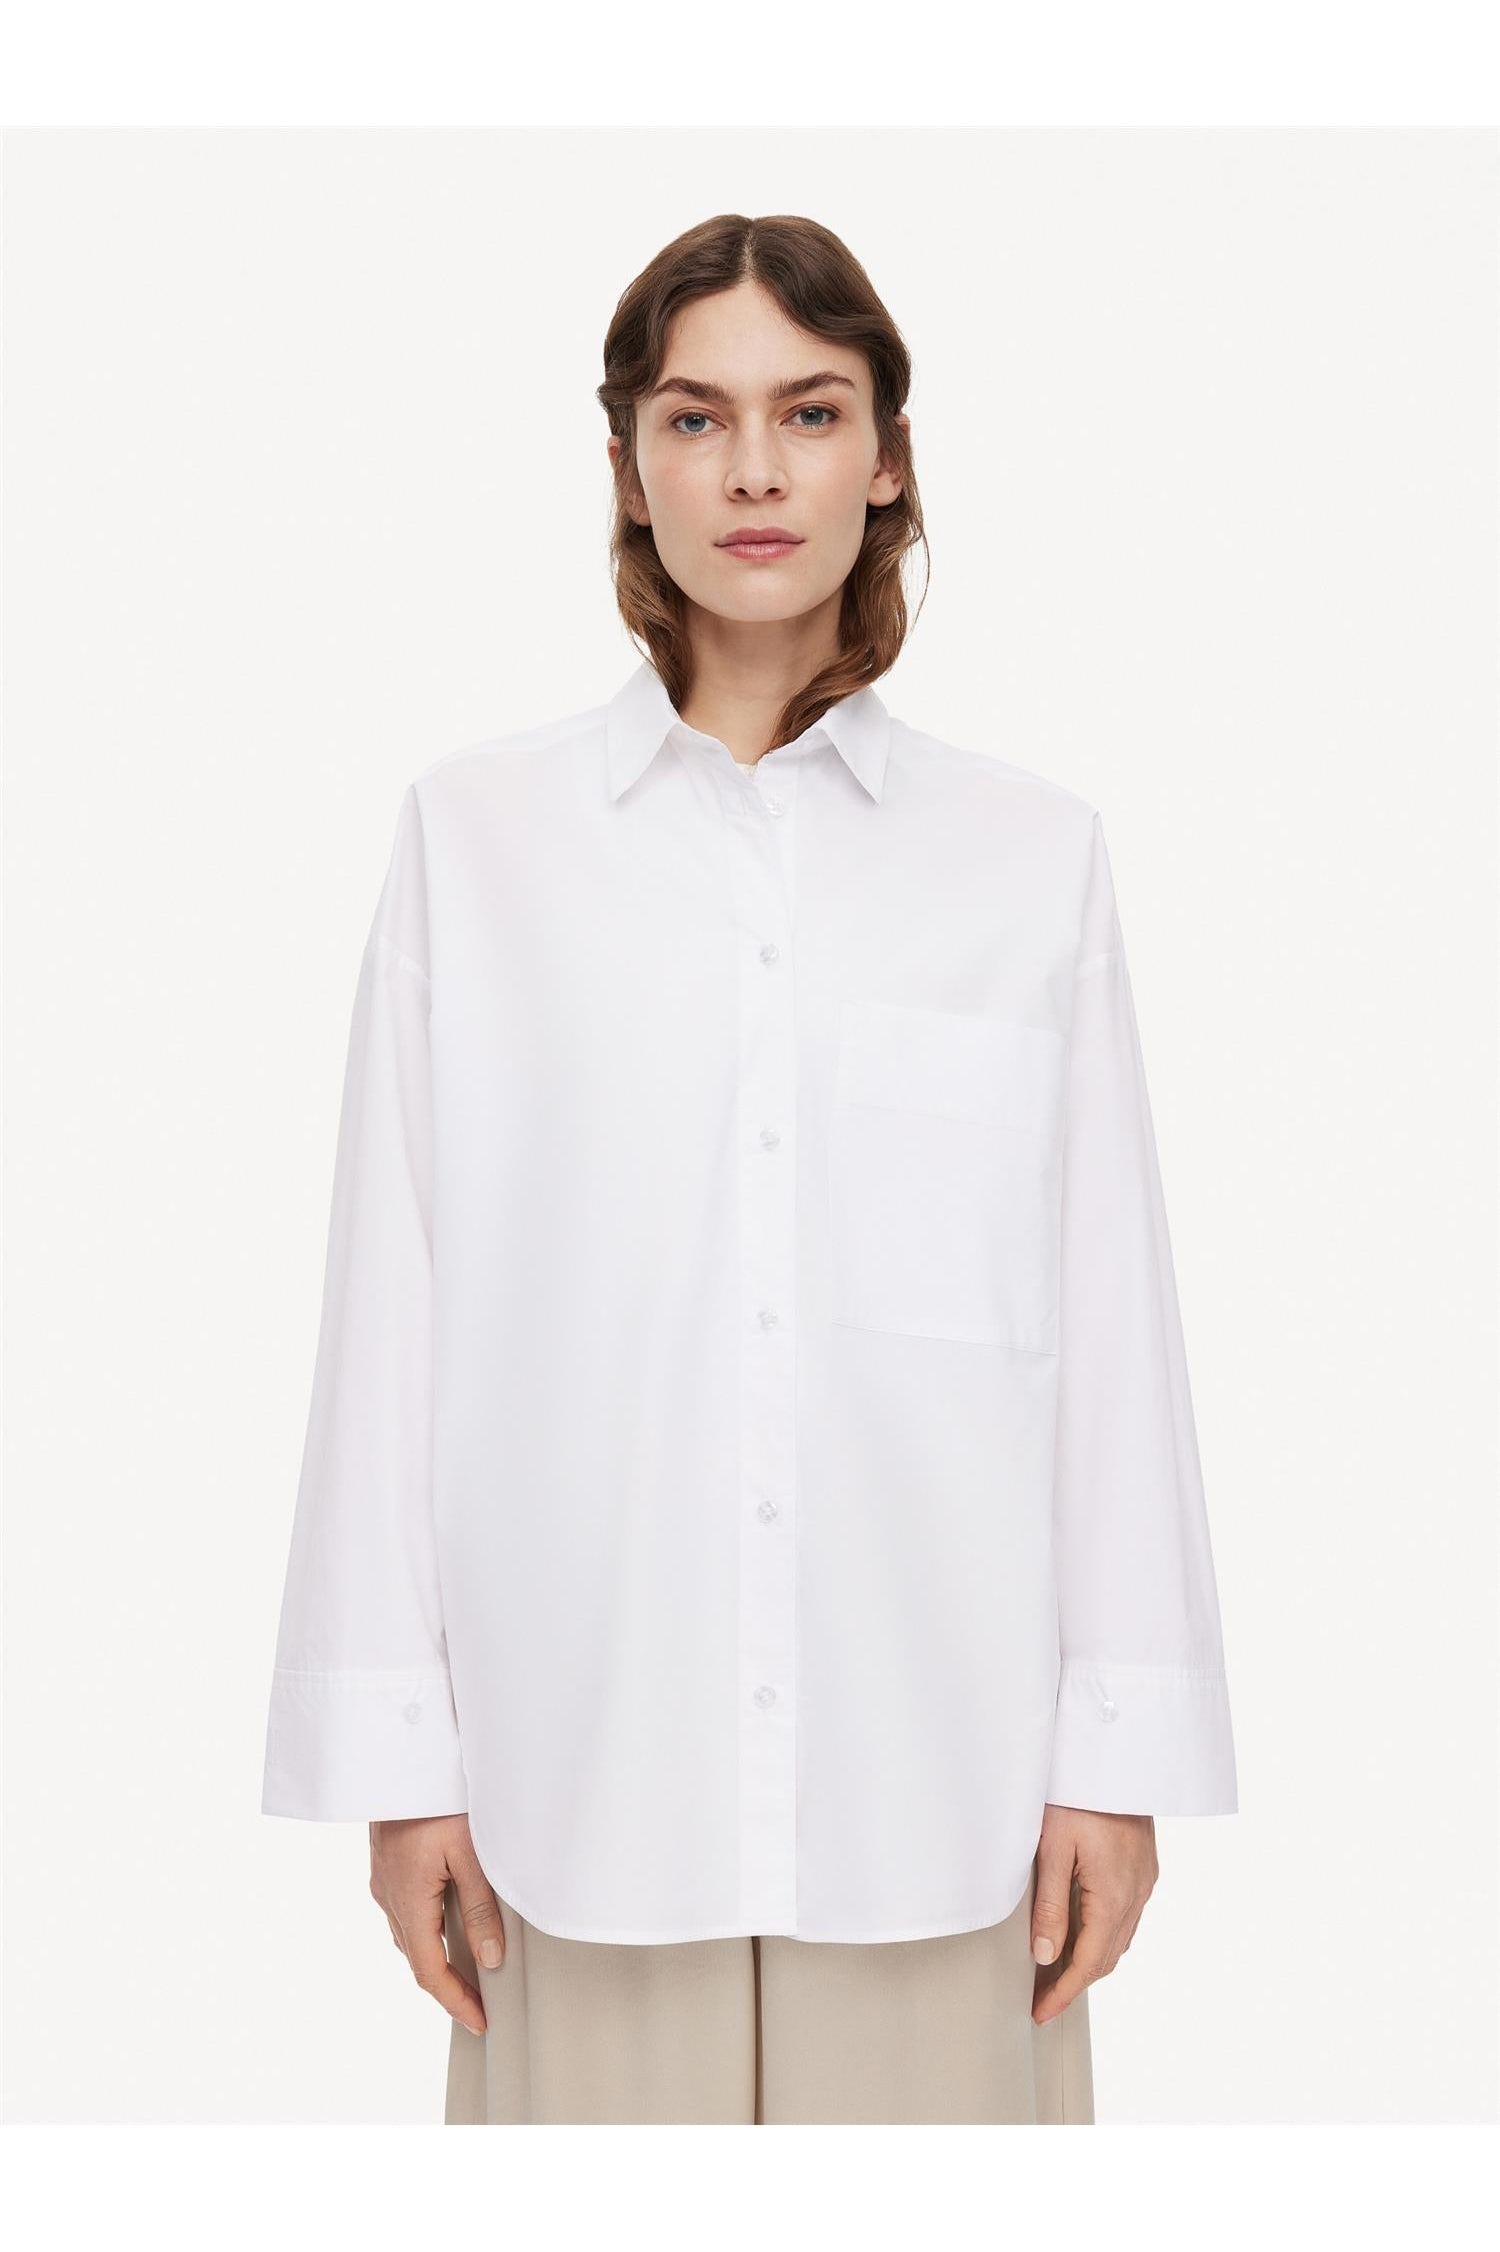 Derris Organic Cotton Shirt White